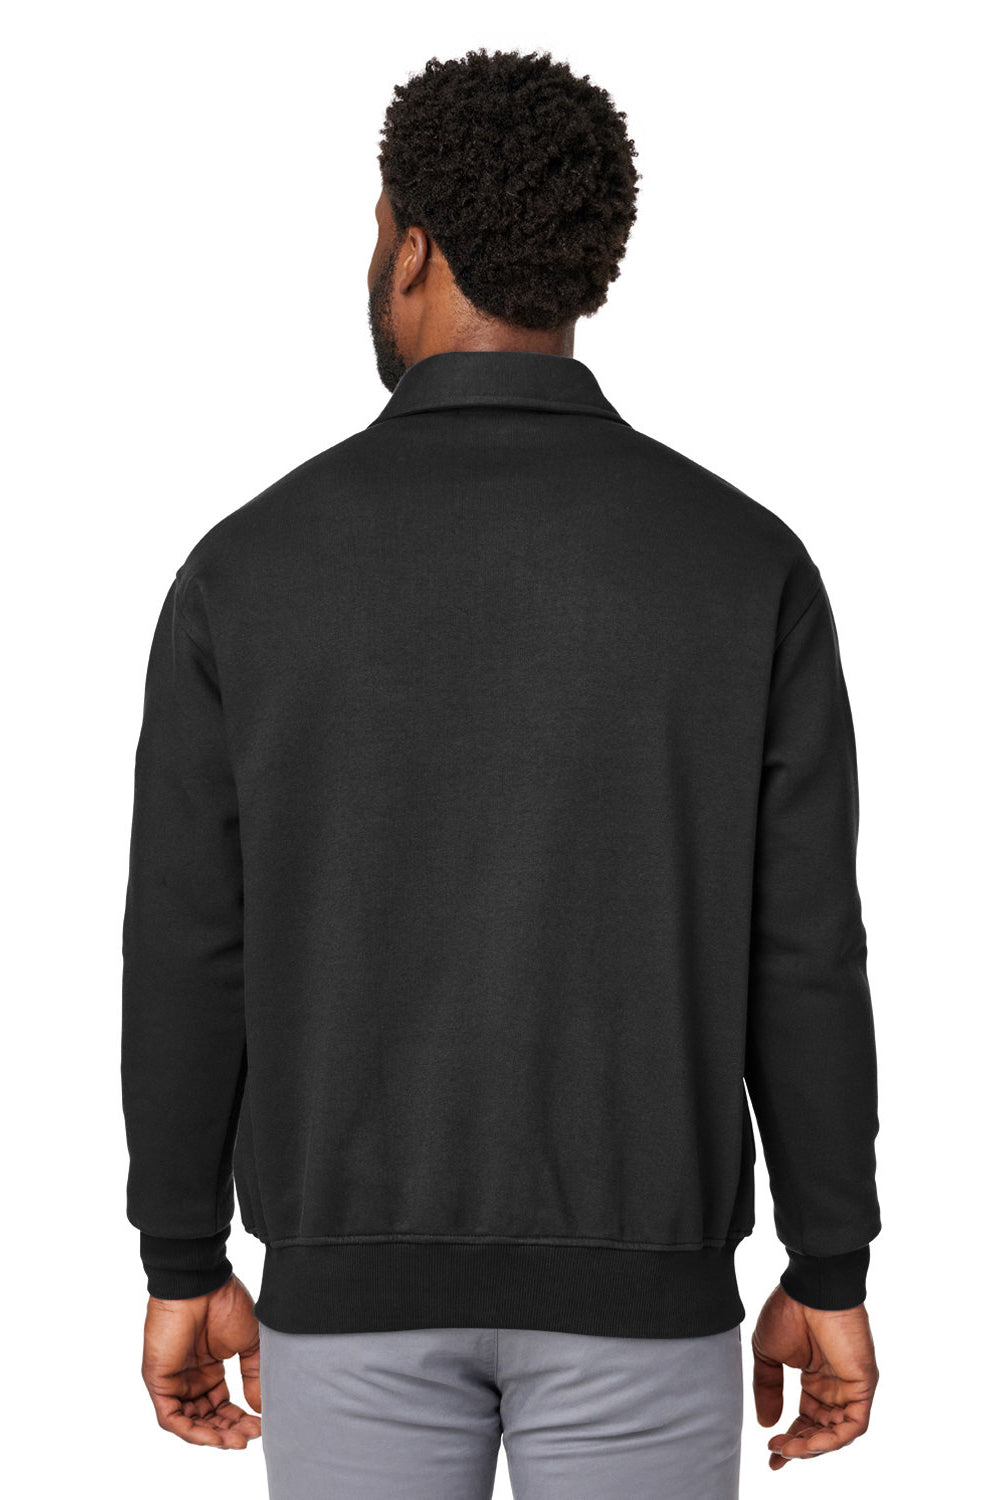 Harriton M712 Mens Climabloc 1/4 Zip Sweatshirt Black Back